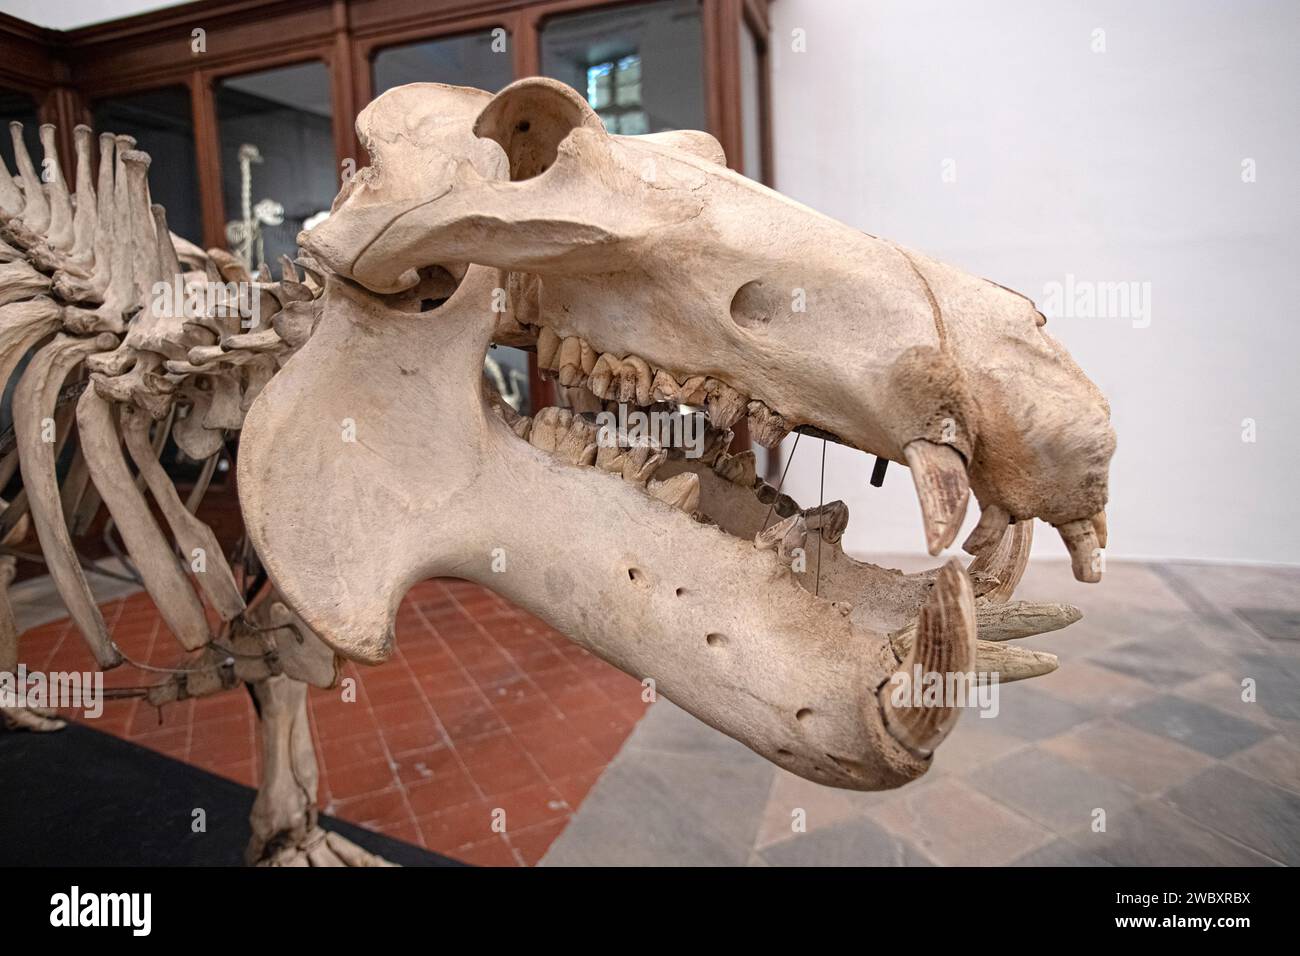 Italien Piemont Turin Regionalmuseum für Naturwissenschaften - Skelett des Hippopotamus amphibius, Hippopotamus - Head Credit: Realy Easy Star/Alamy Live News Stockfoto